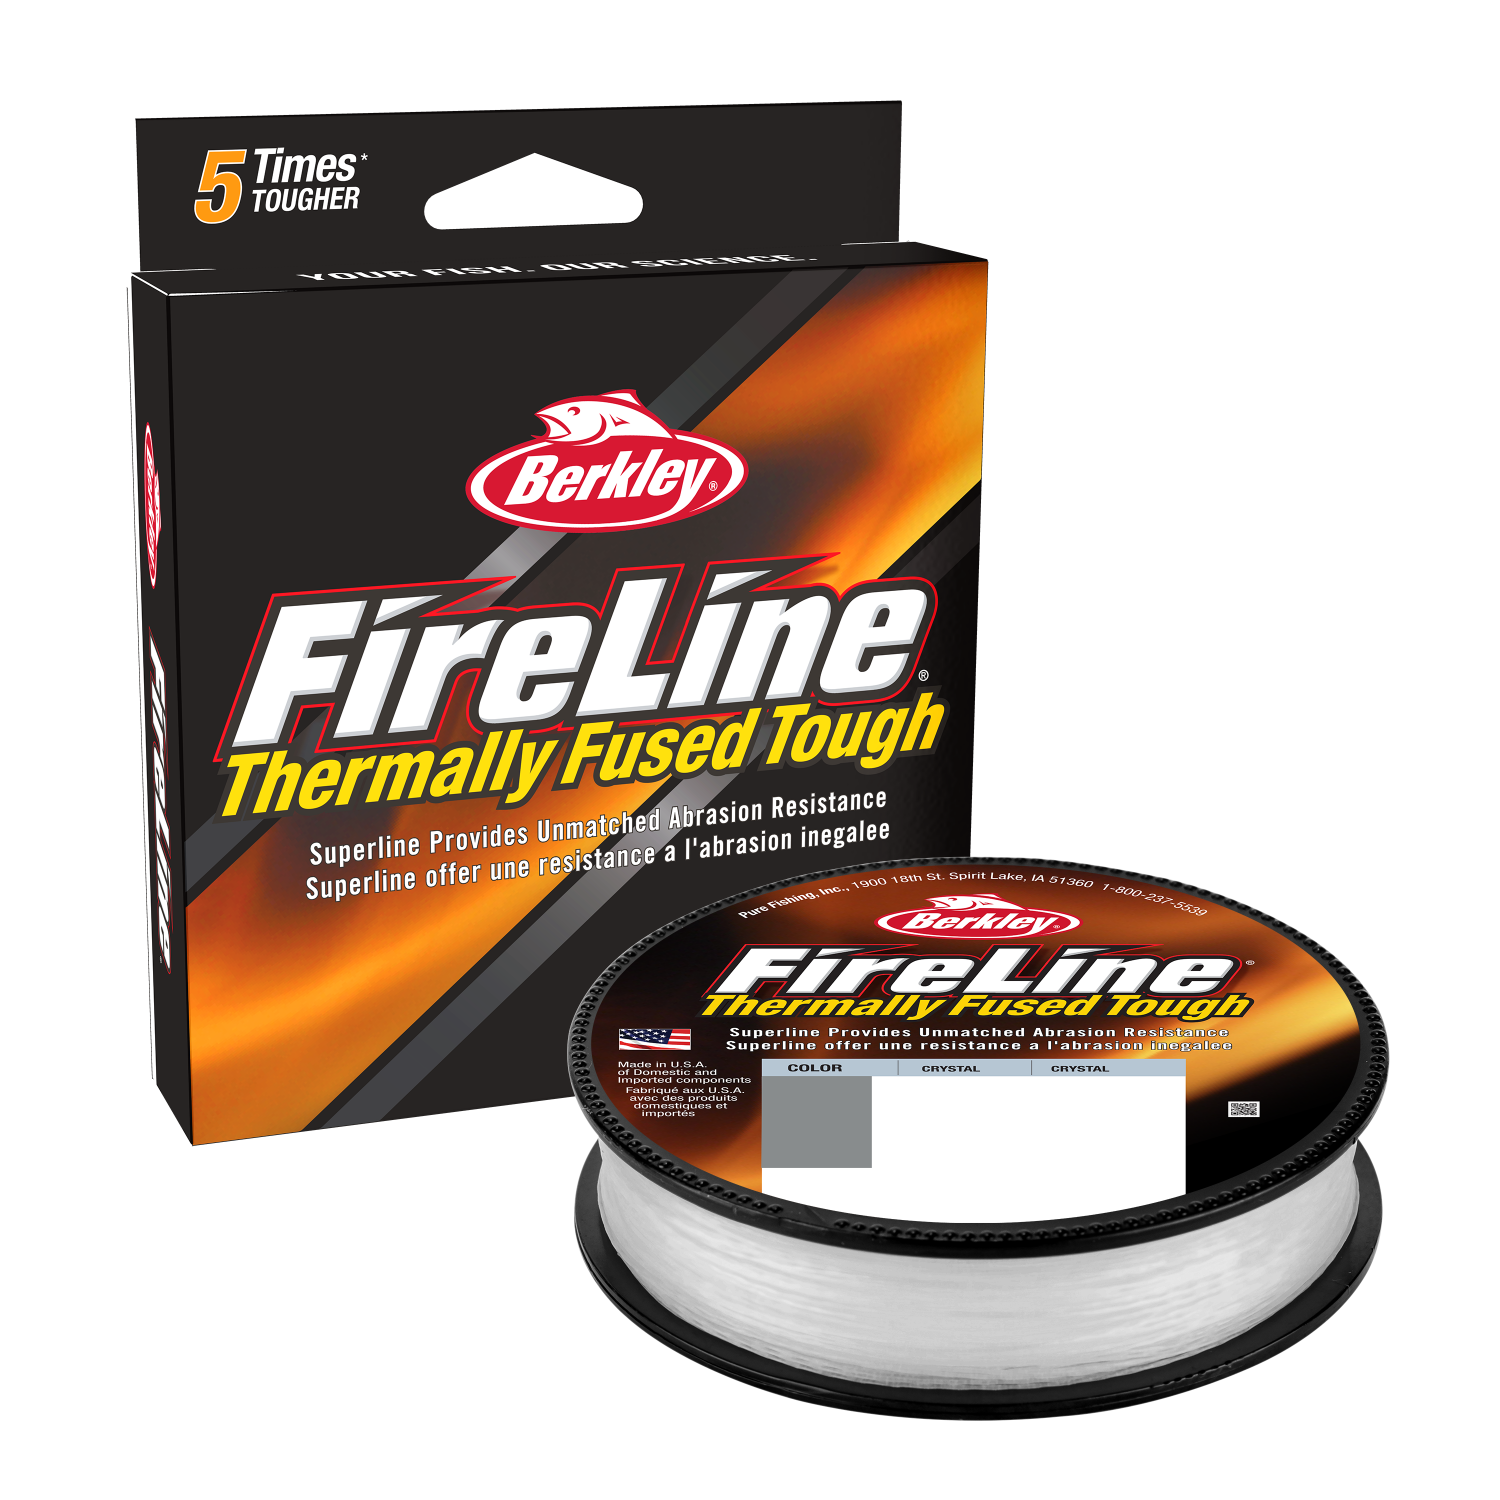 BERKLEY Fireline Fused Original braided fishing line transparent 150  1553672 00